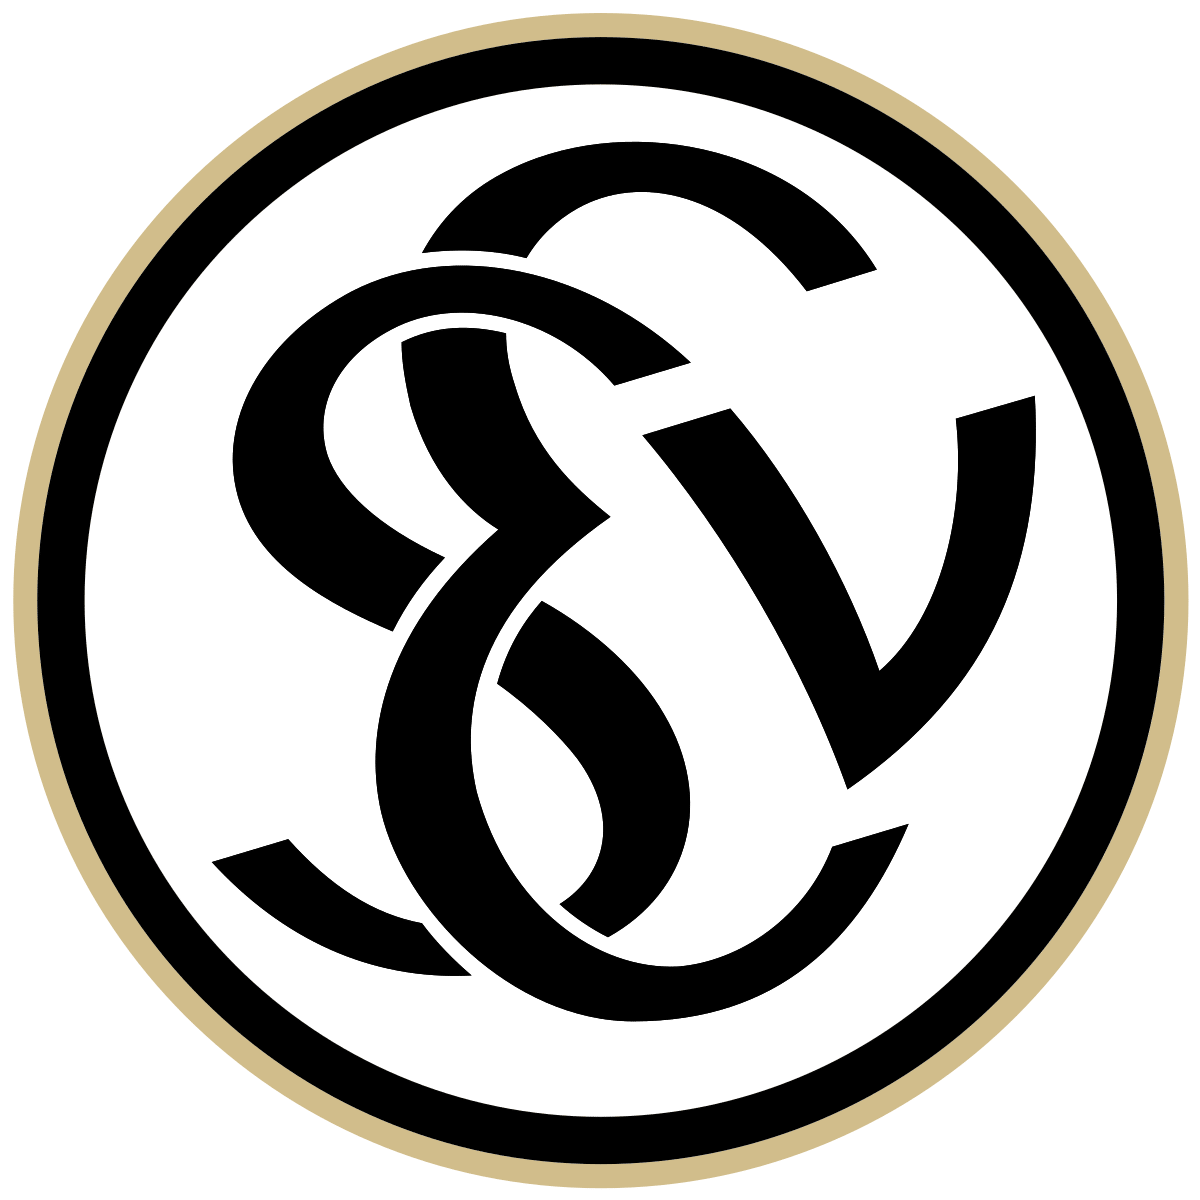 SV Elversberg Logo 2021.svg